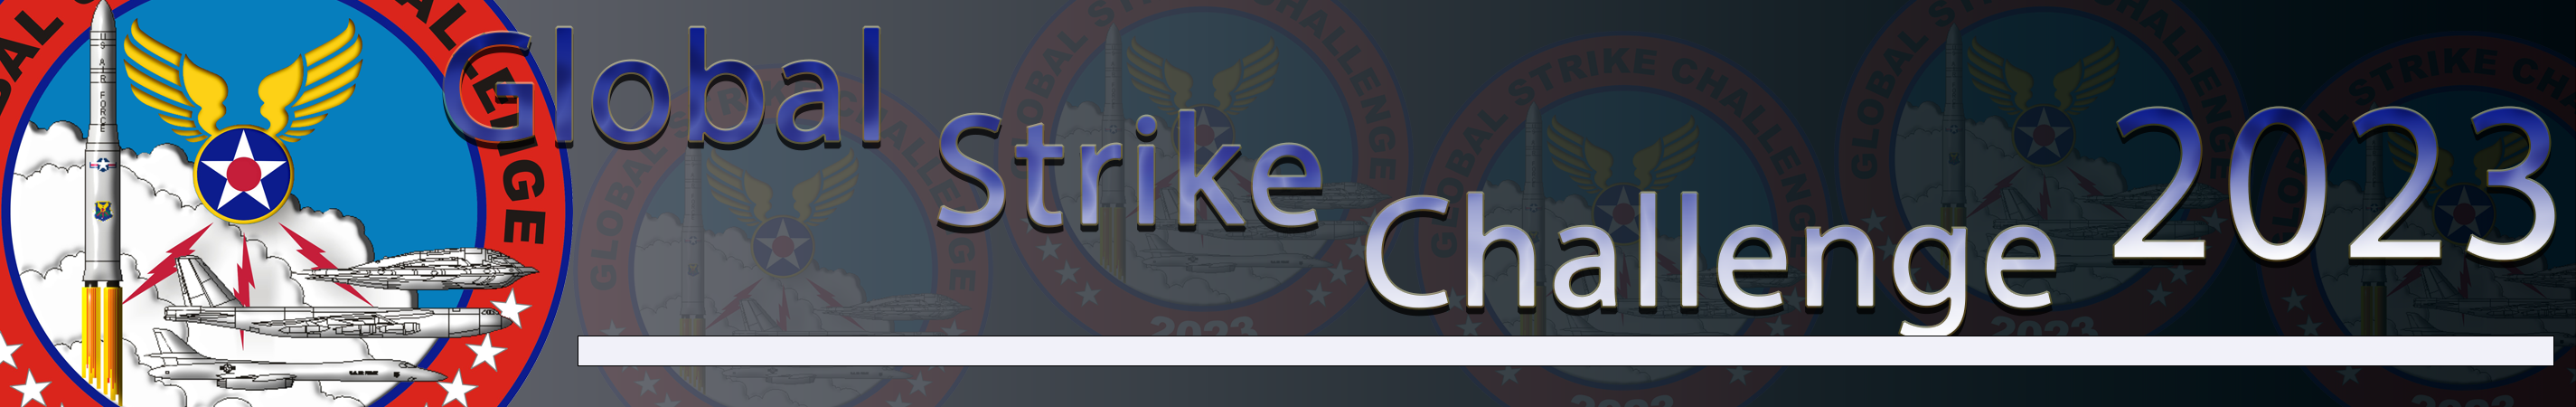 Global Strike Challenge Banner